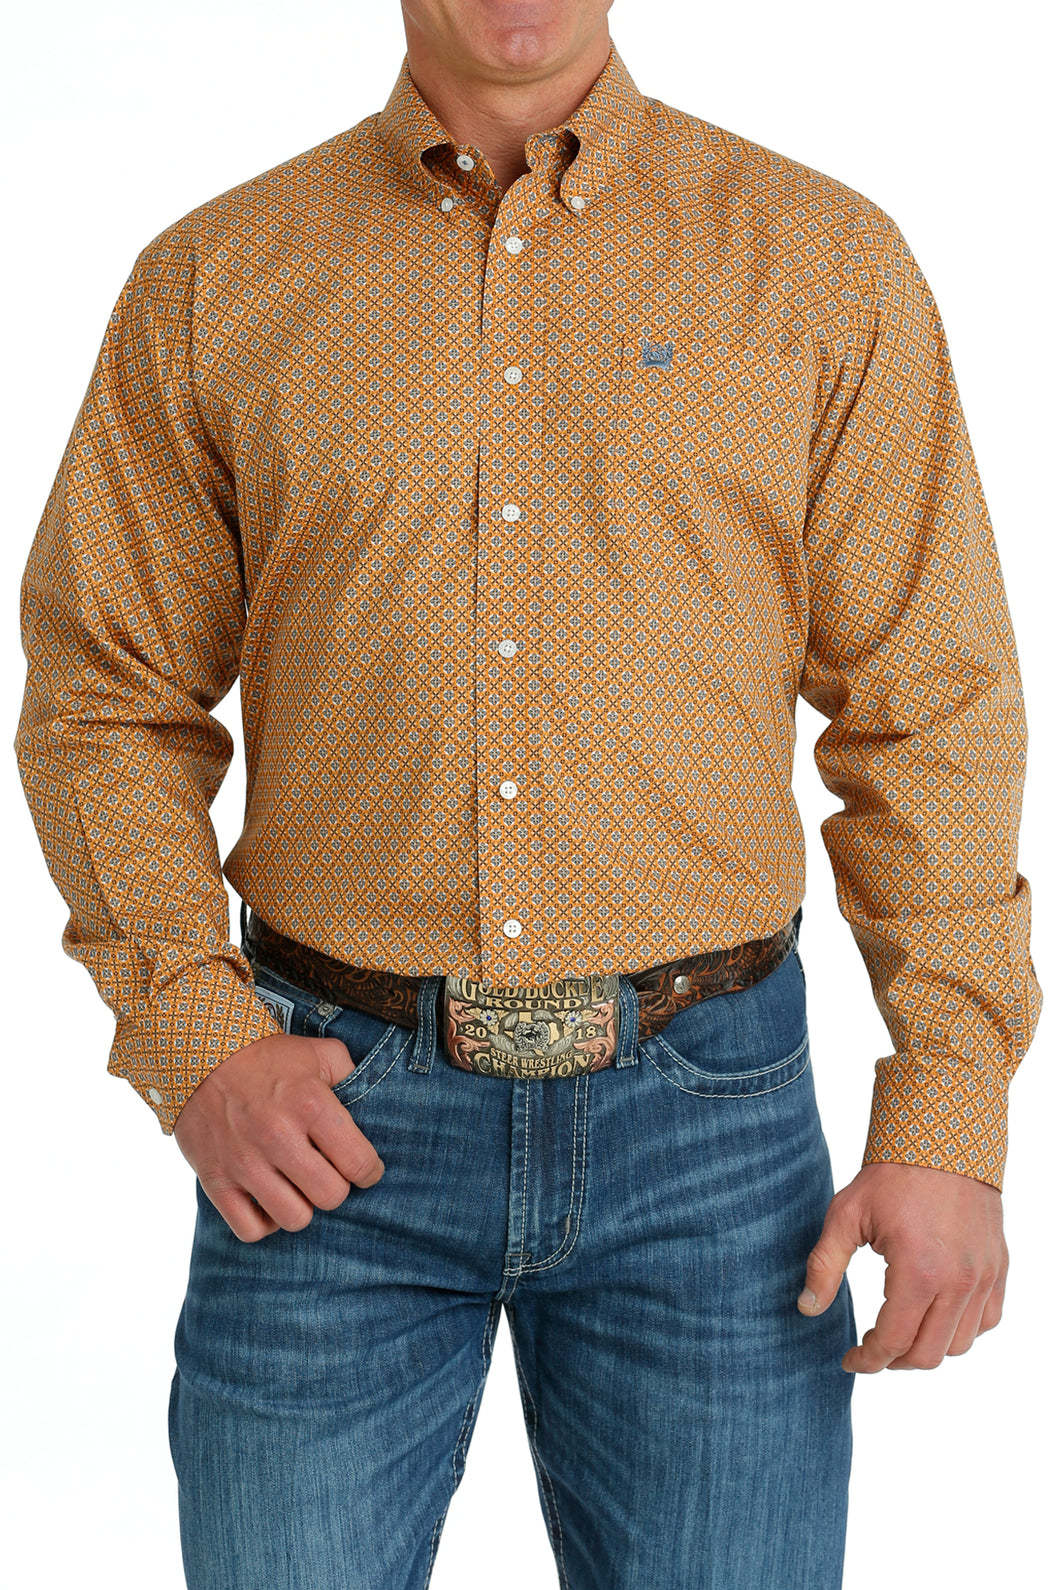 Pard's Western Shop Cinch Men's Orange/Blue Geometric Print Button-Down Shirt